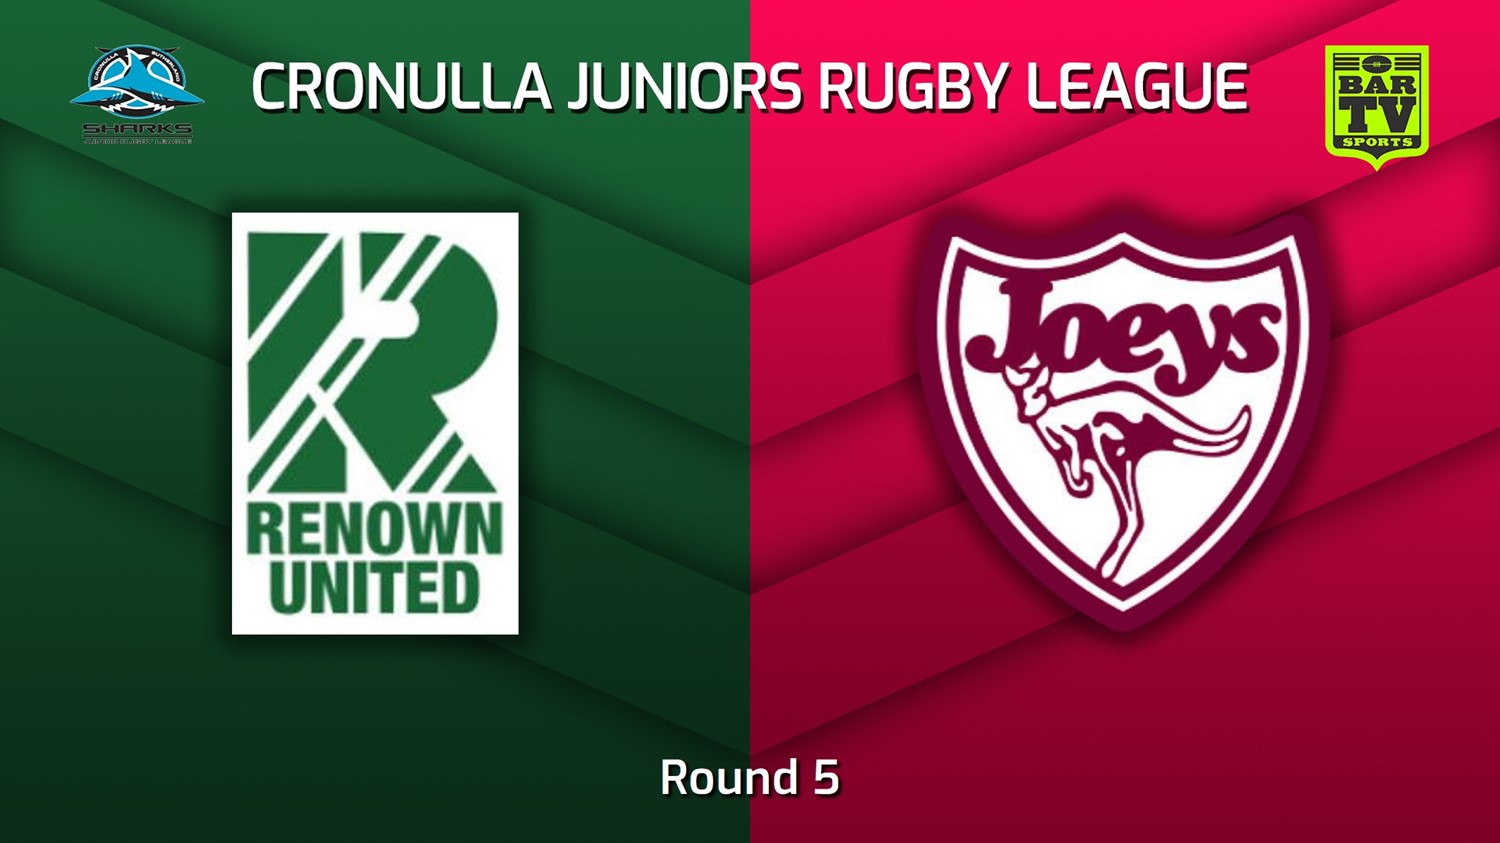 230513-Cronulla Juniors Round 5 - U12 Gold - Renown United v St Josephs Minigame Slate Image